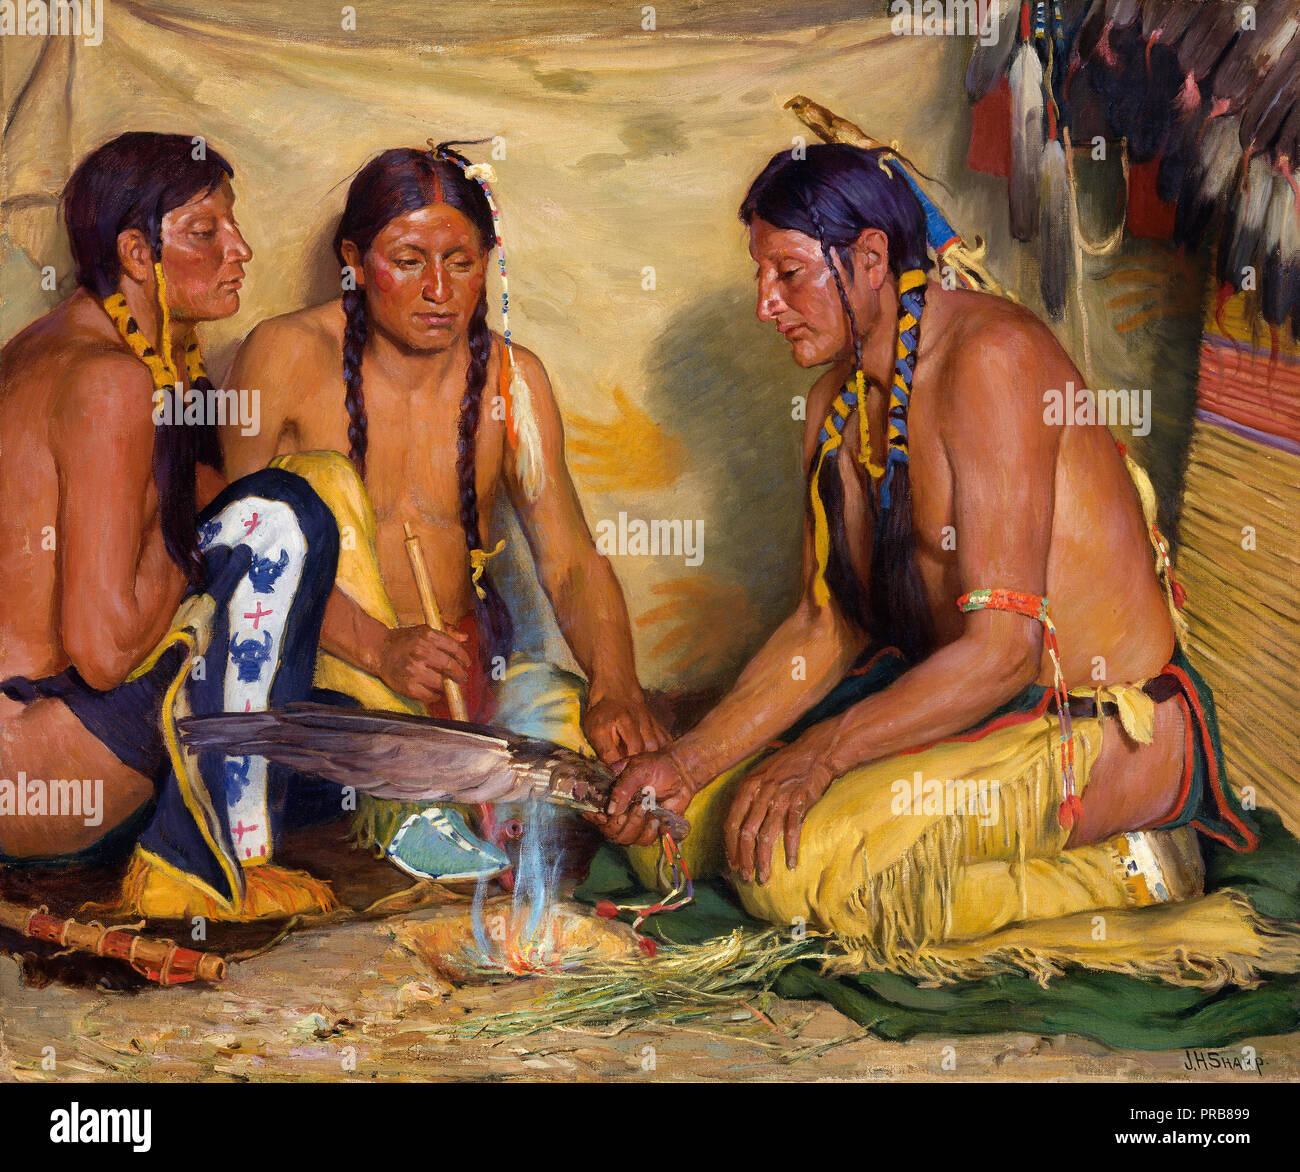 Joseph Henry Sharp, Making Sweet Grass Medicine, Blackfoot Ceremony, Circa 1920 Oil on canvas, Smithsonian American Art Museum, Washington, D.C., USA. Stock Photo